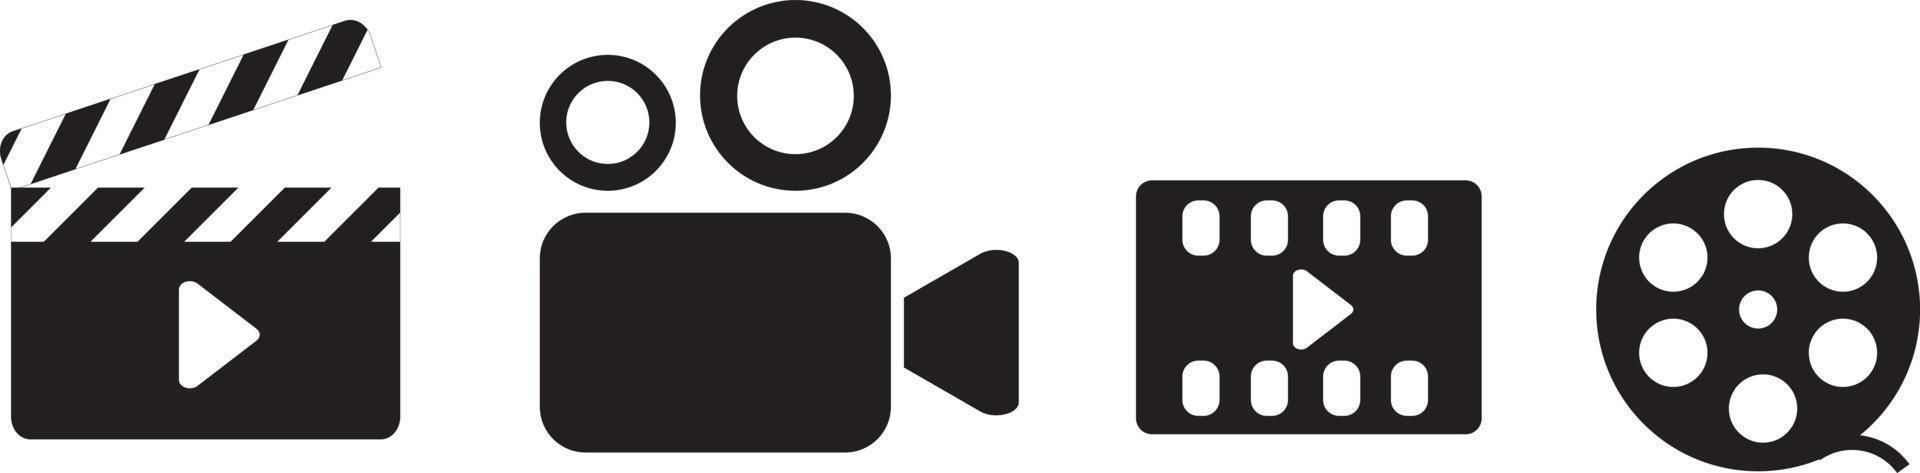 Cinema icons - Film Clapper, Camera, Film reel, Video. Cinema symbol. Vector